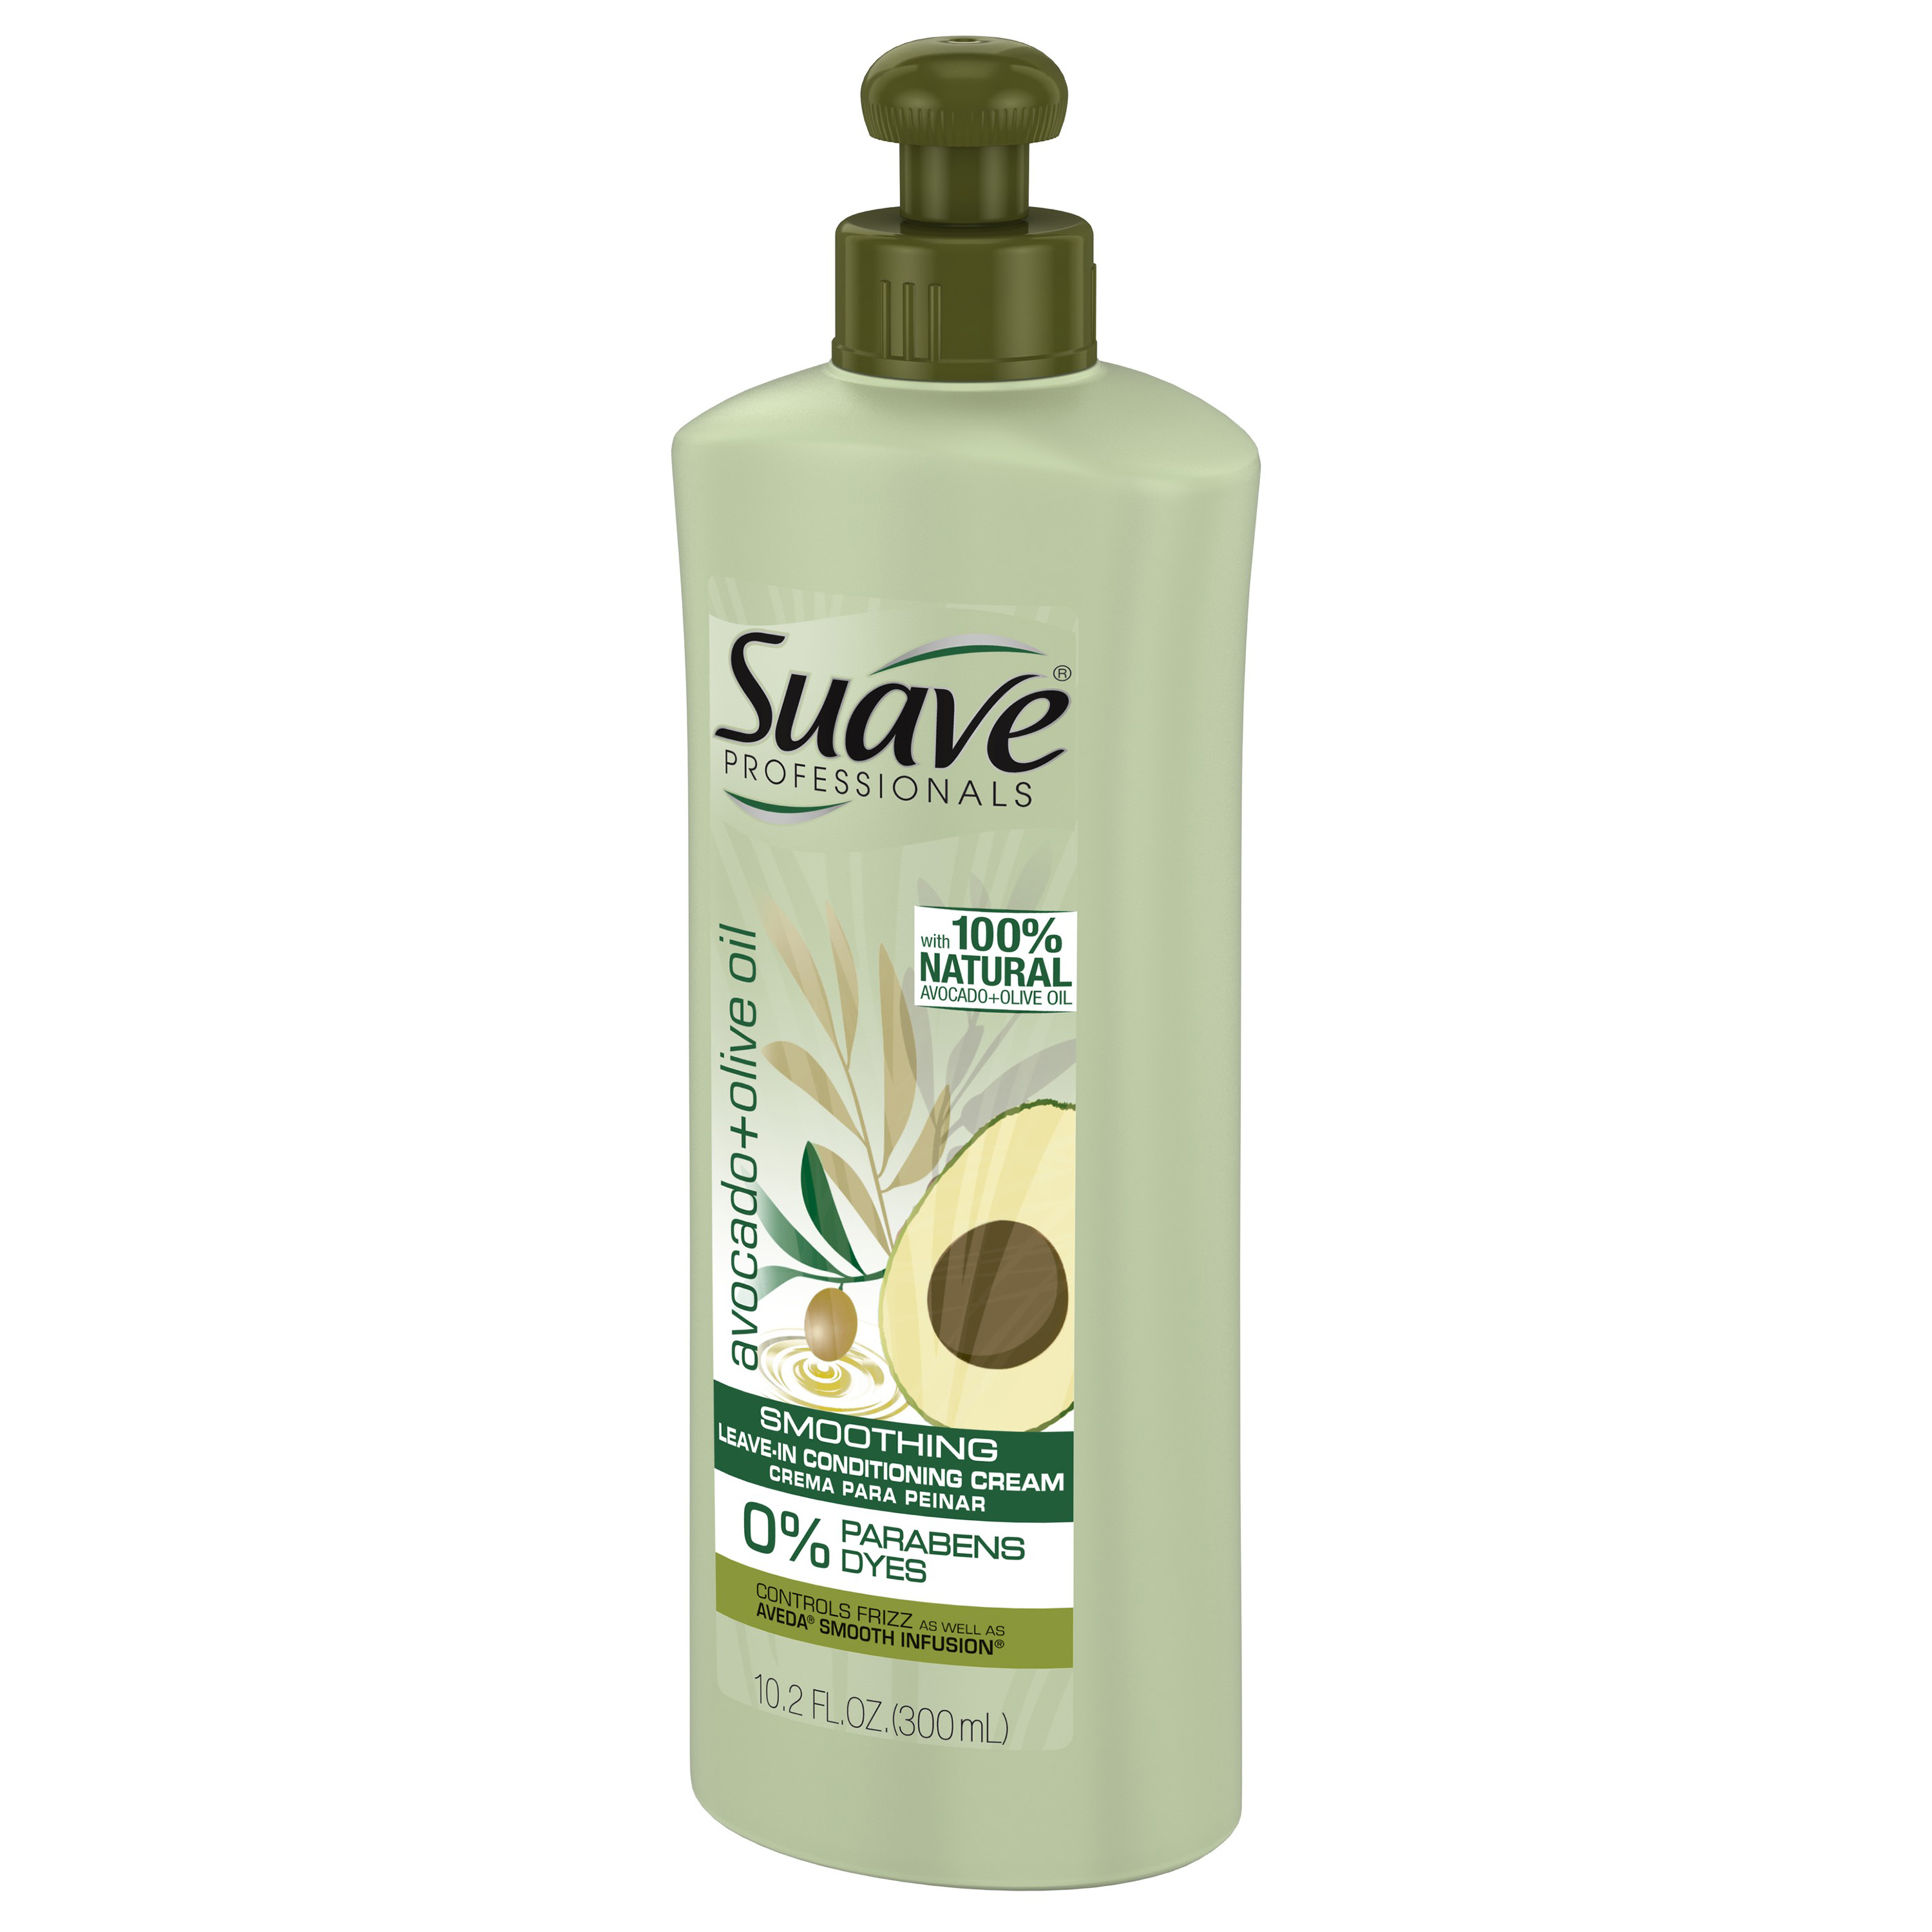 Suave Professionals Avocado + Olive Oil Leave-in Conditioner, 10.2 oz - image 6 of 10